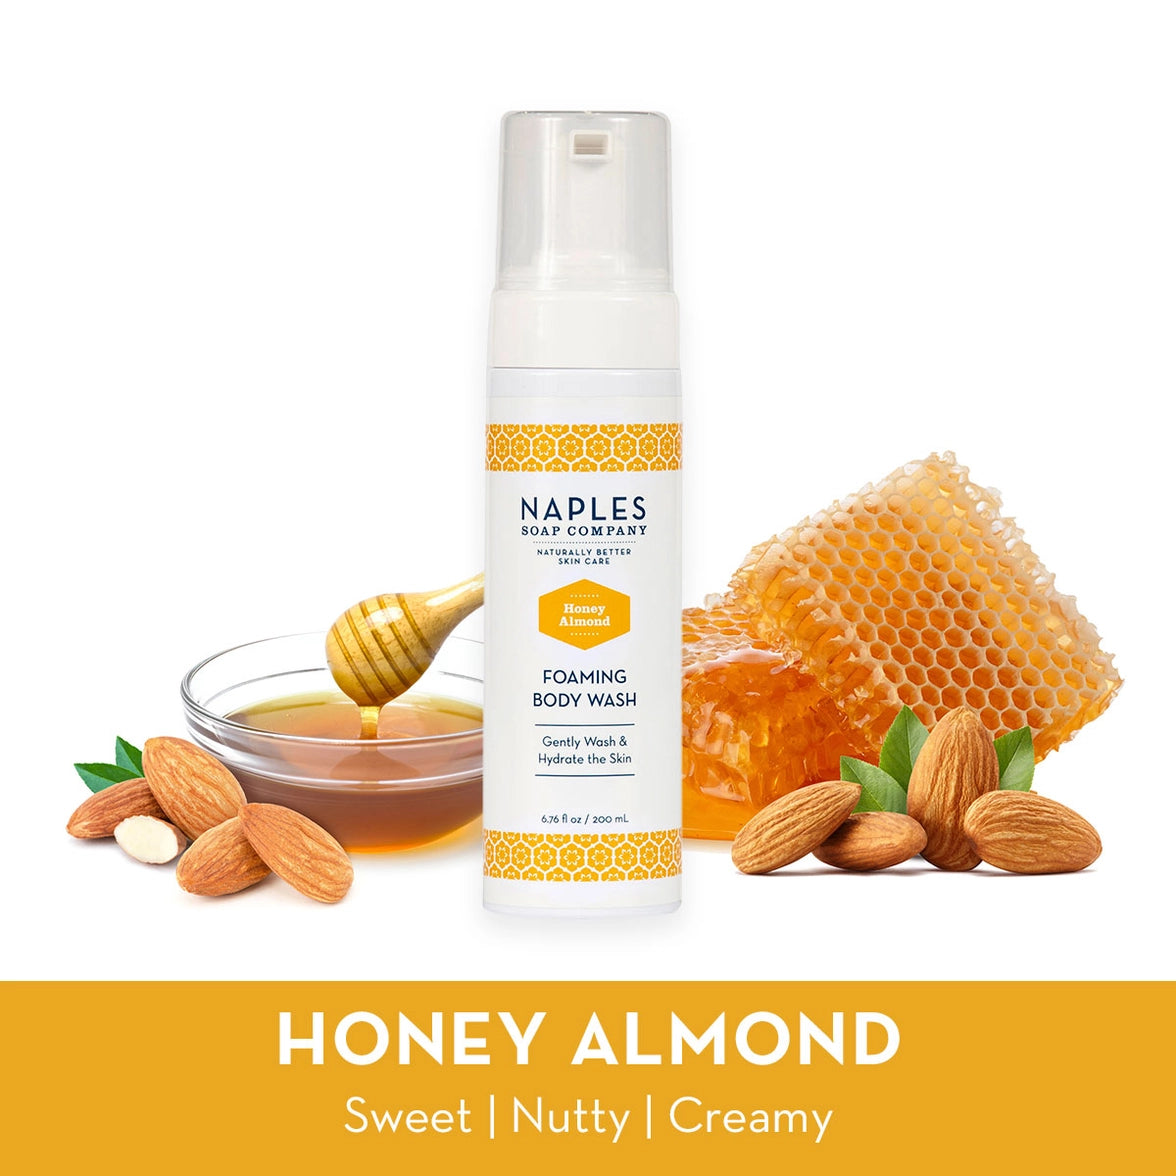 Naples Soap Co.: Honey Almond Foaming Body Wash